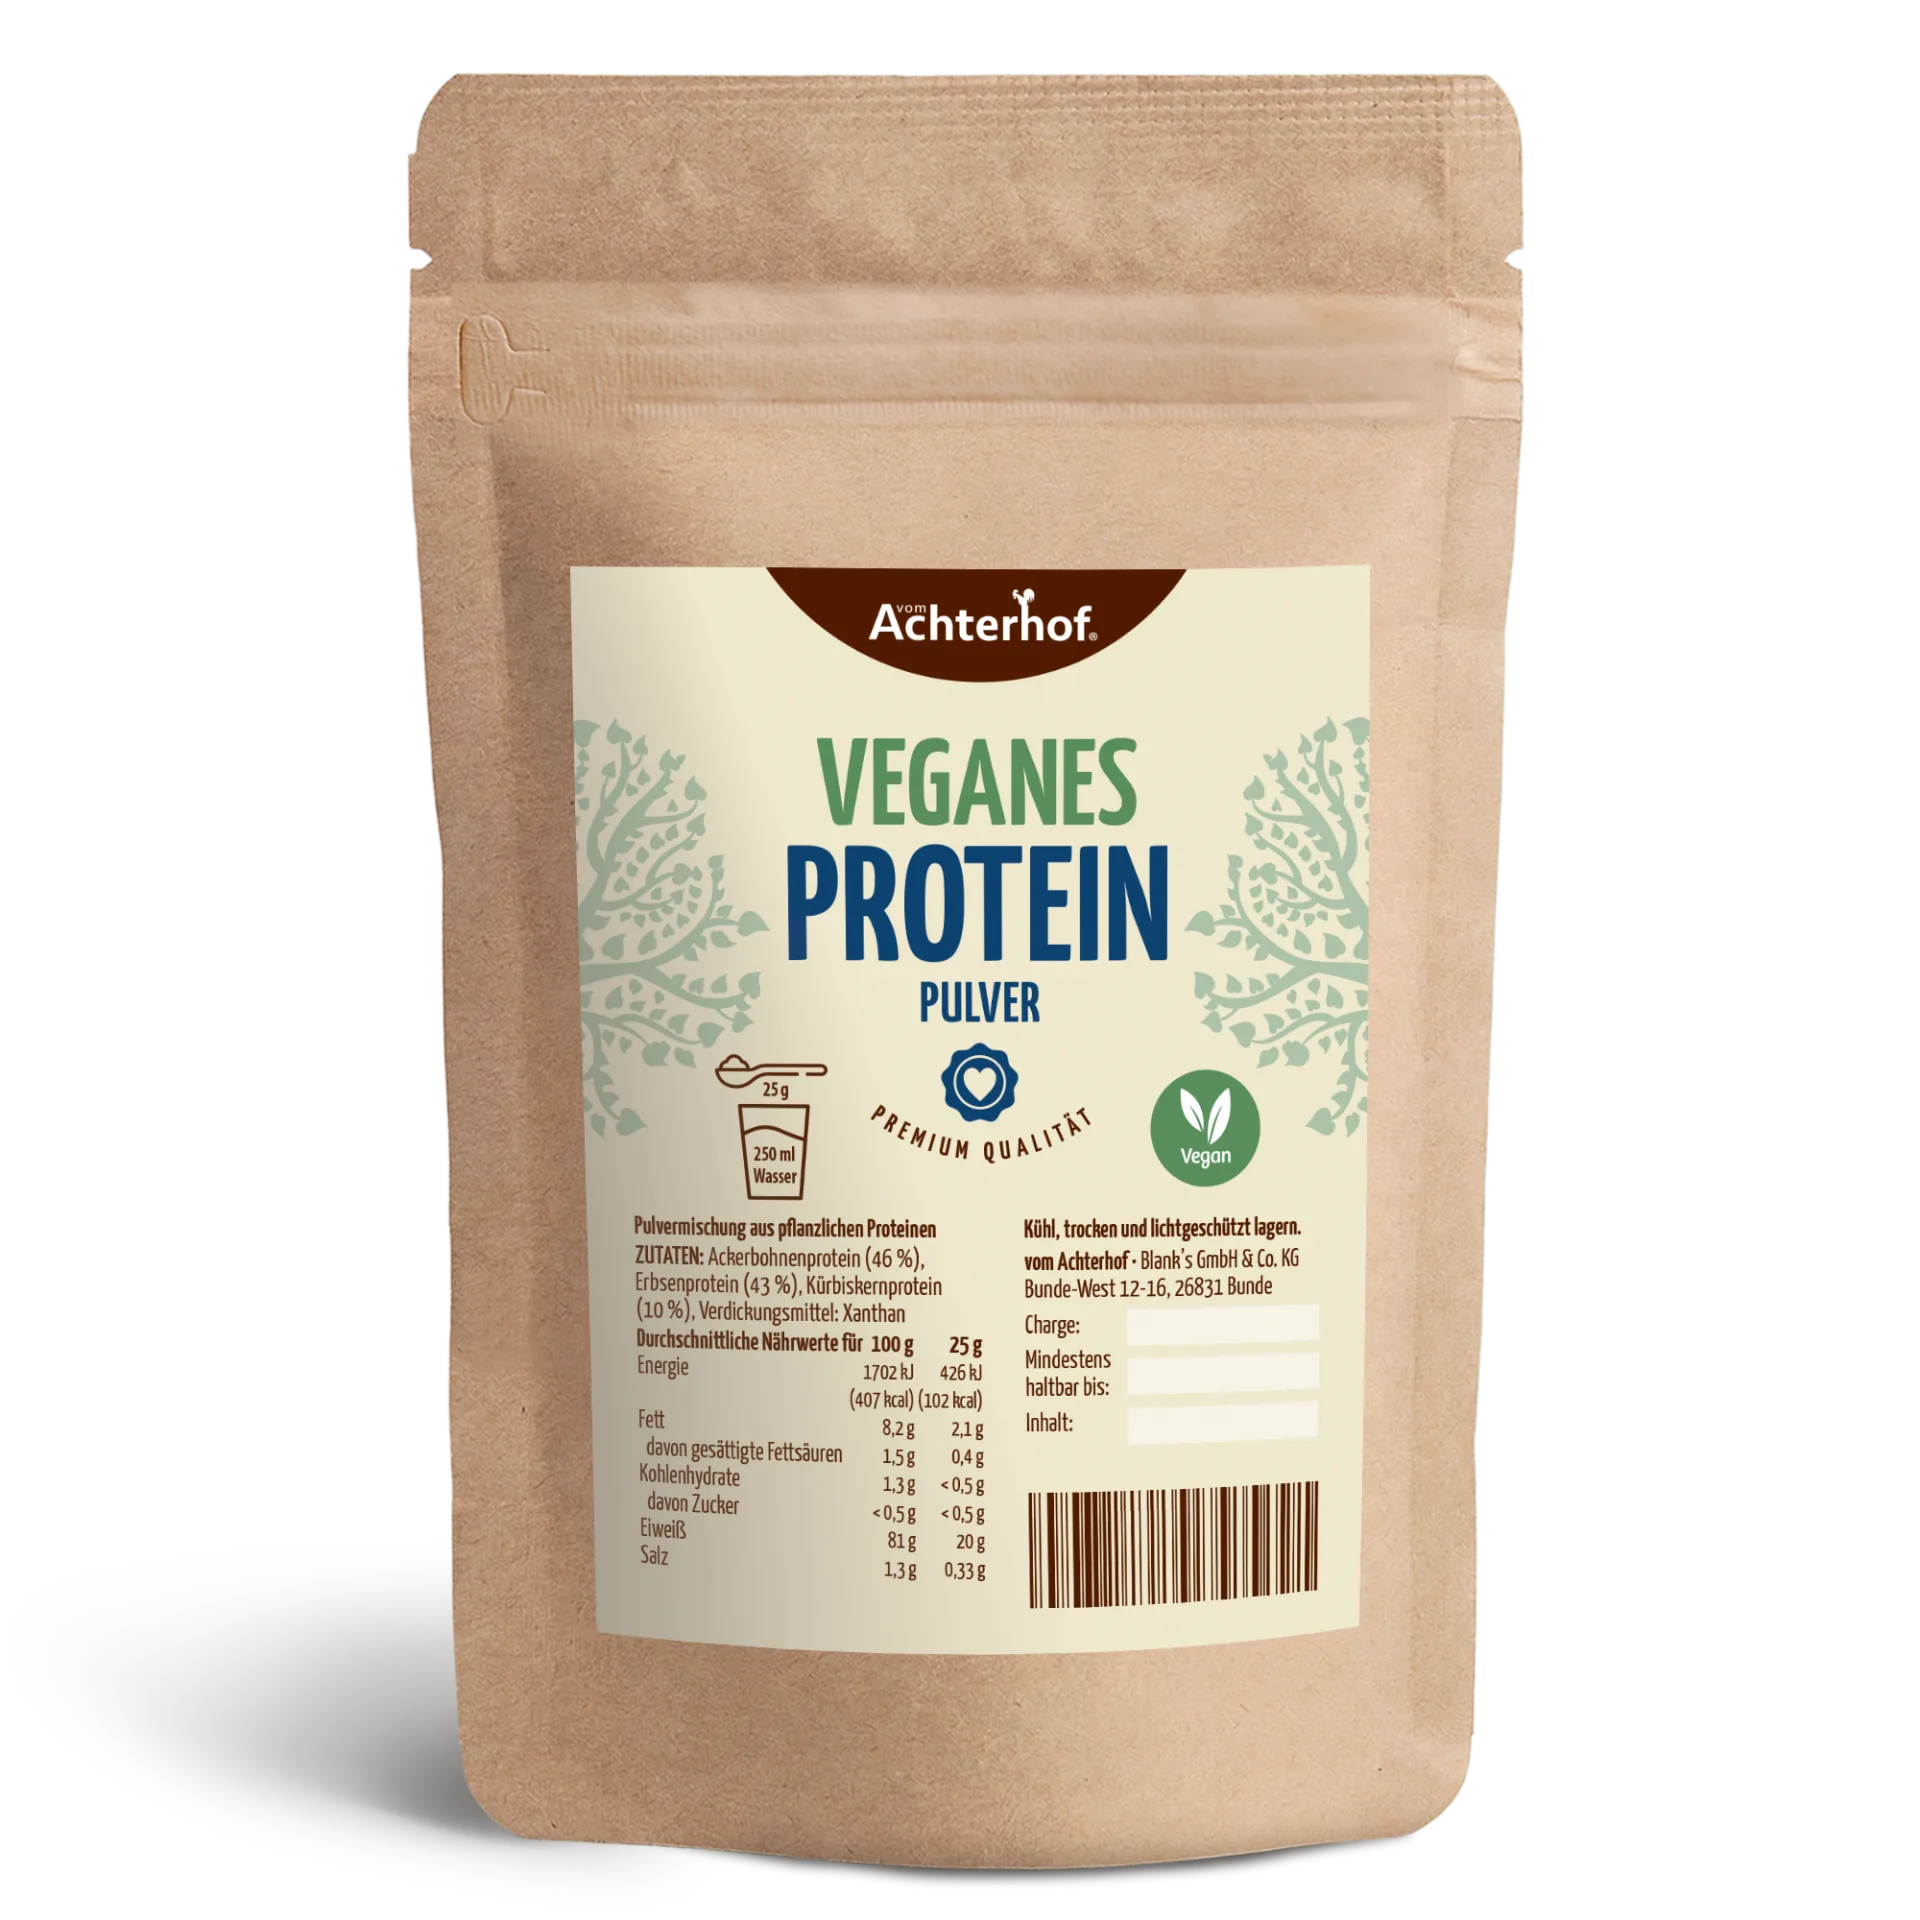 Veganes Proteinpulver (250g) depicted